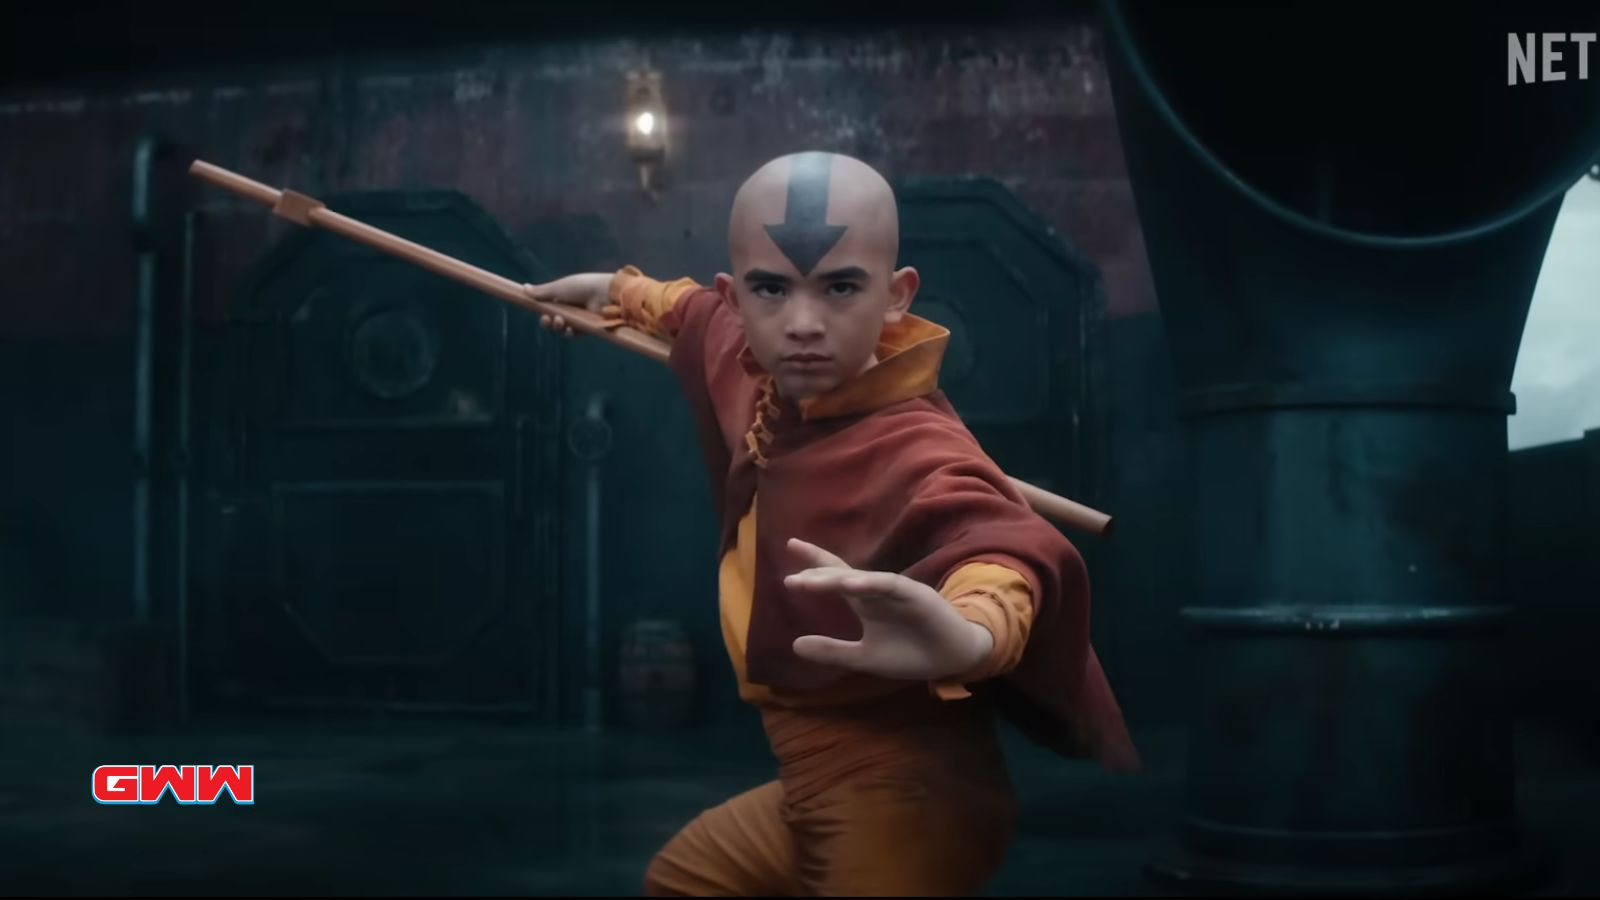 Aang's in his fighting stance against fire benders